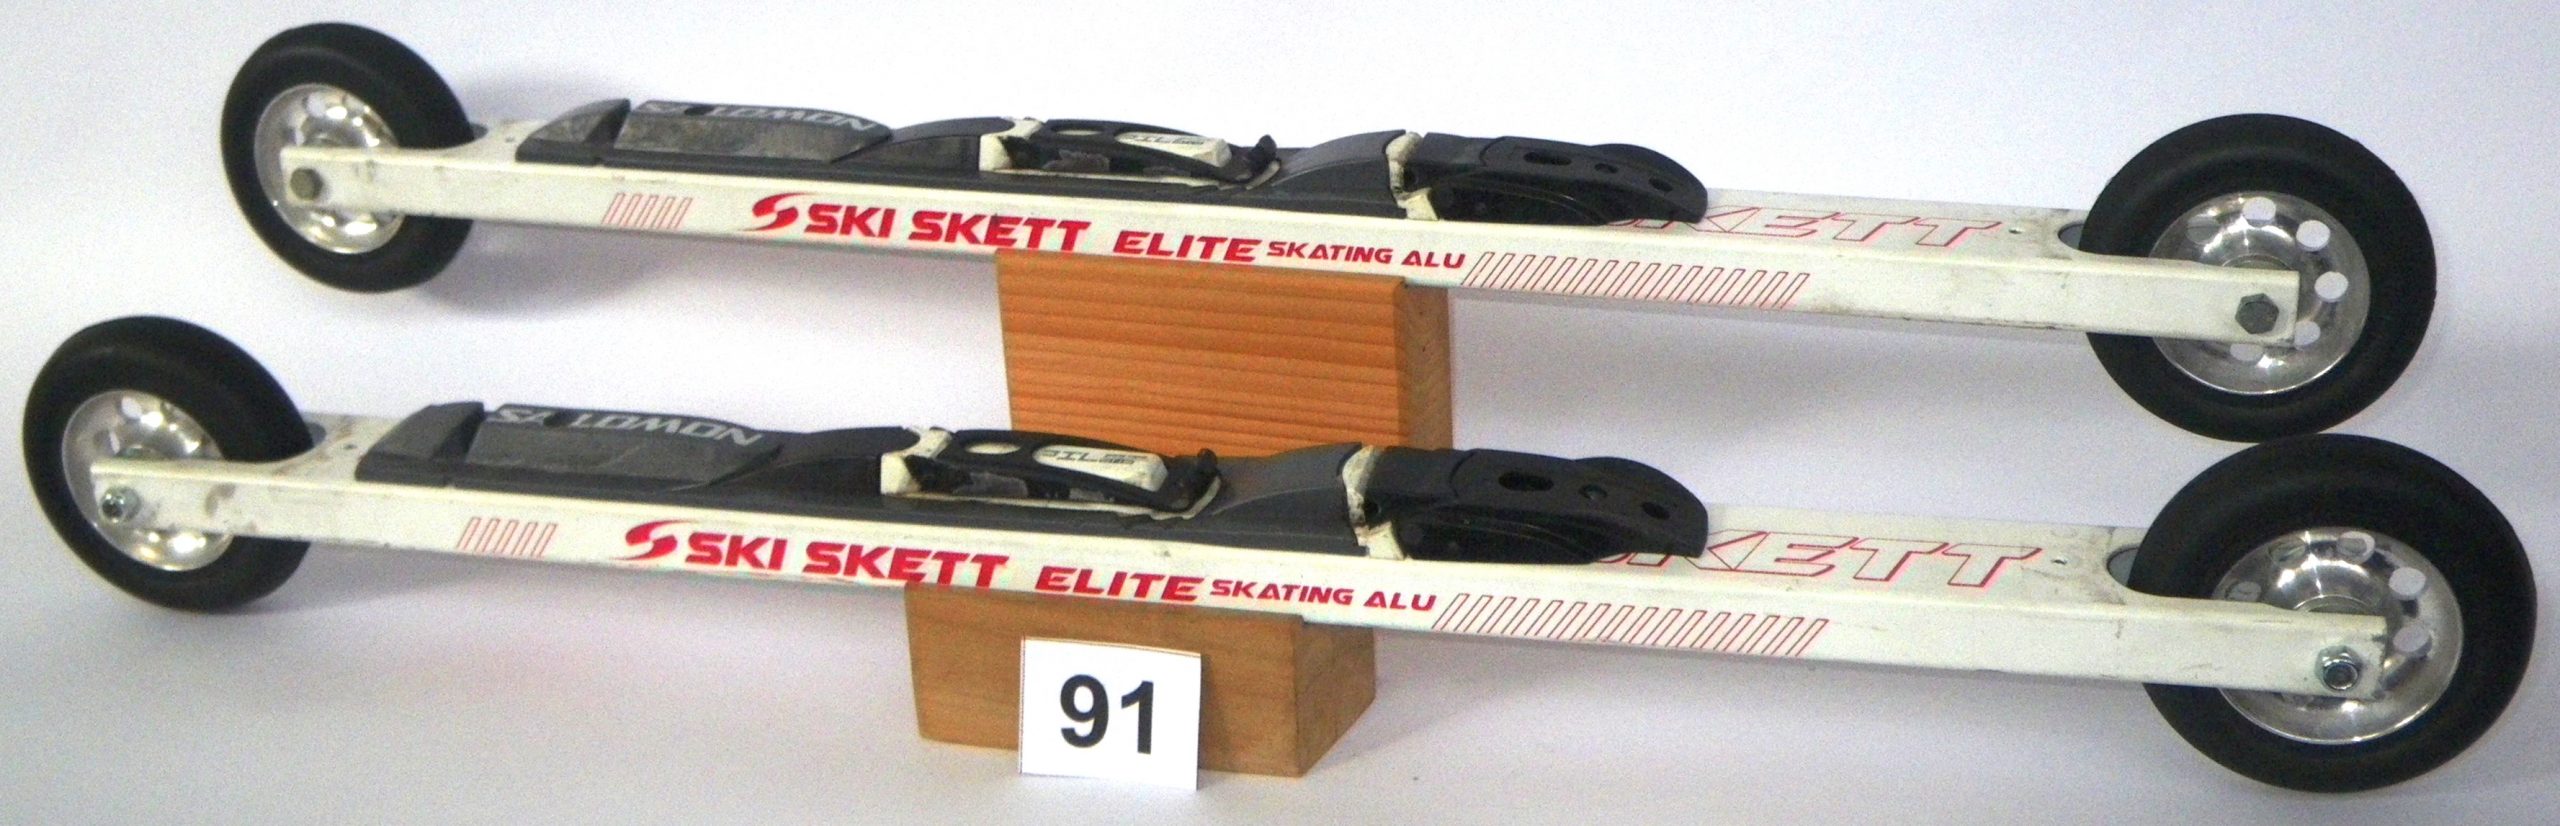 Roller Ski e Skiroll Skiskett prodotto Elite Skate Alu 91